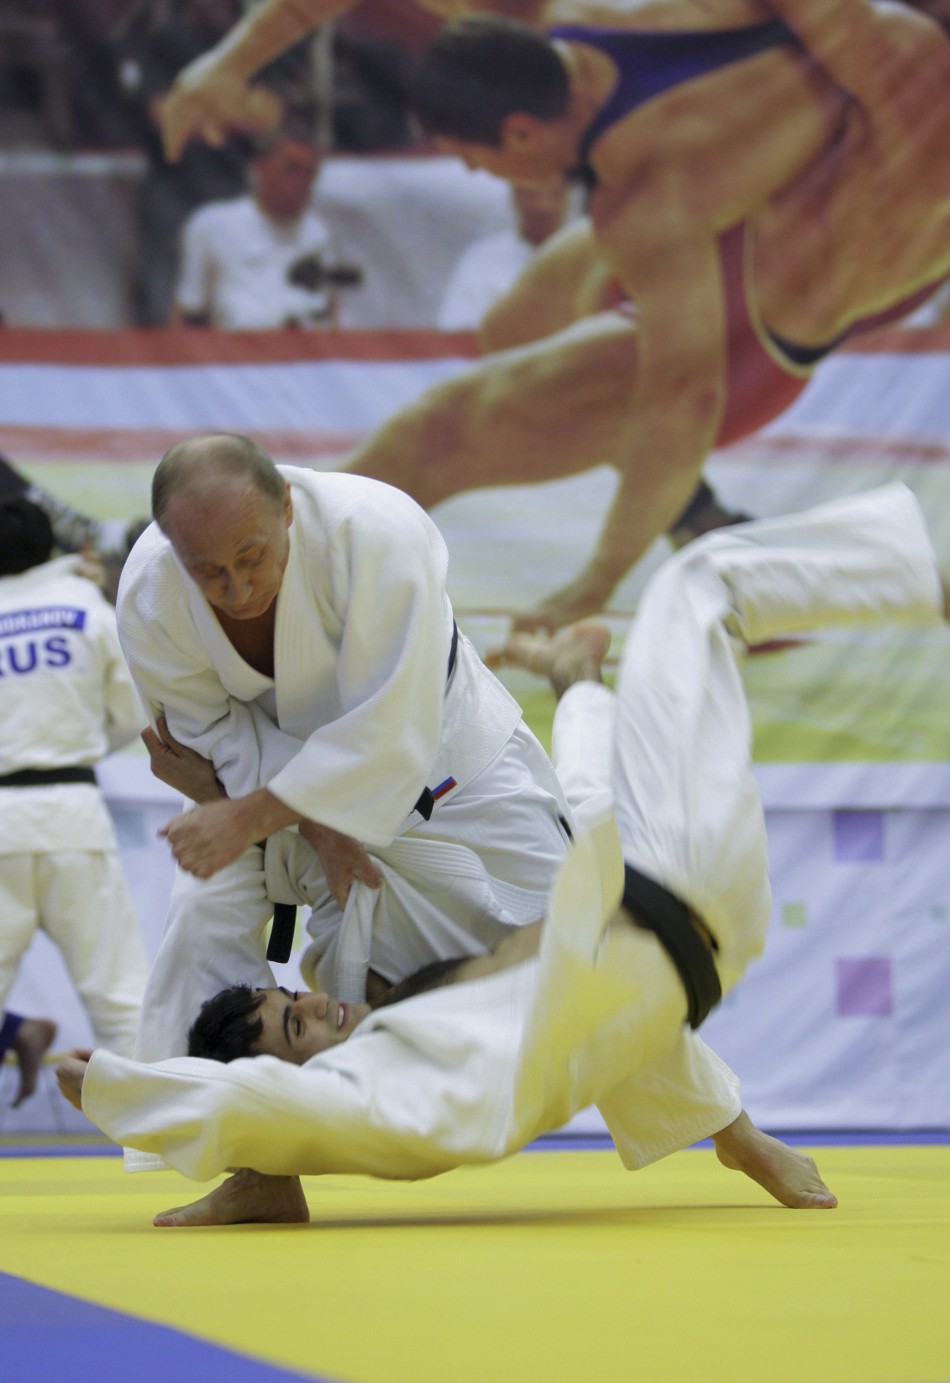 The judoka